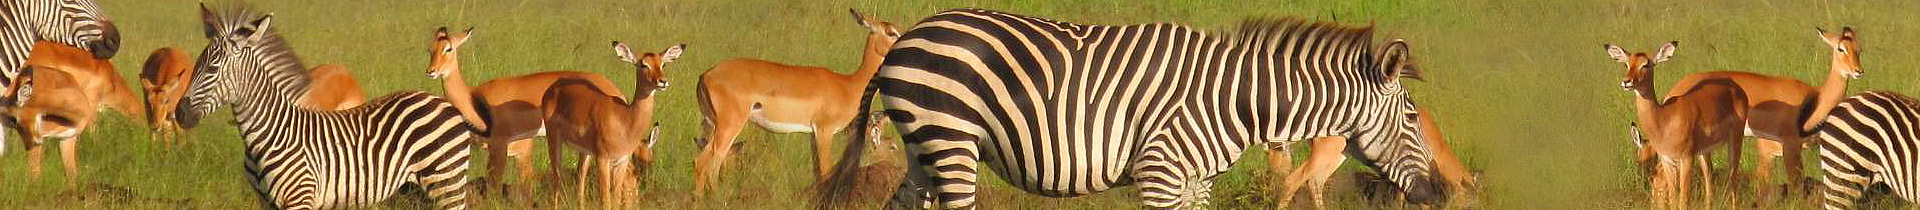 zebras_and_impalas.jpg